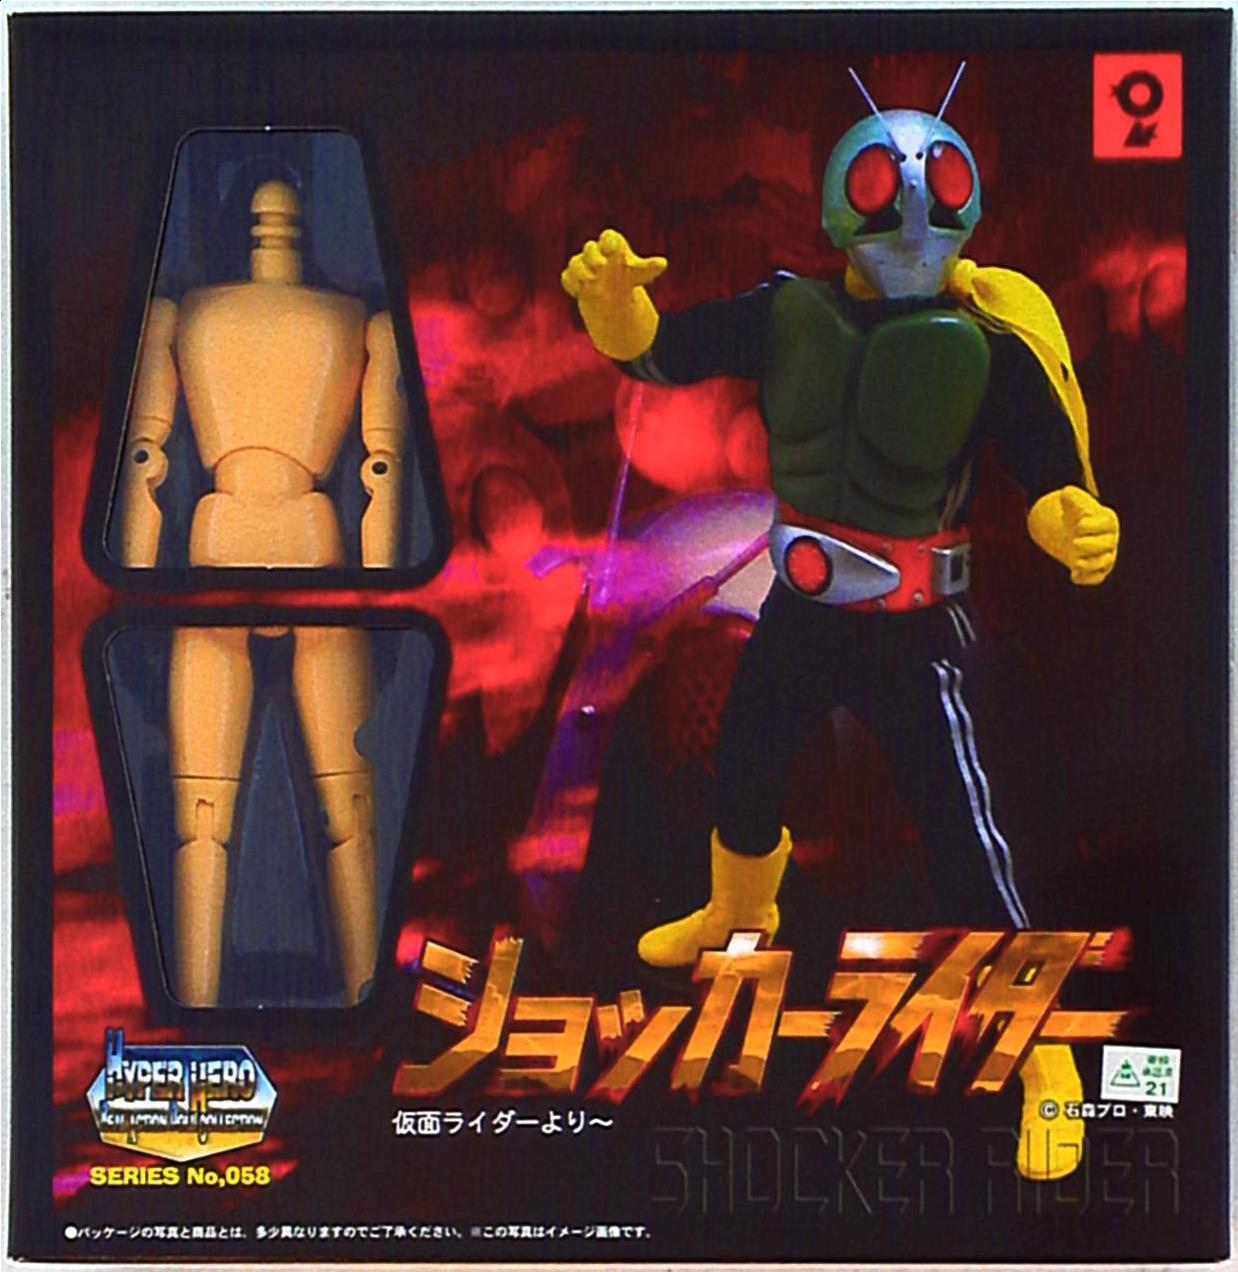 Otsuka planning hyper hero real action Doll collection Kamen Rider